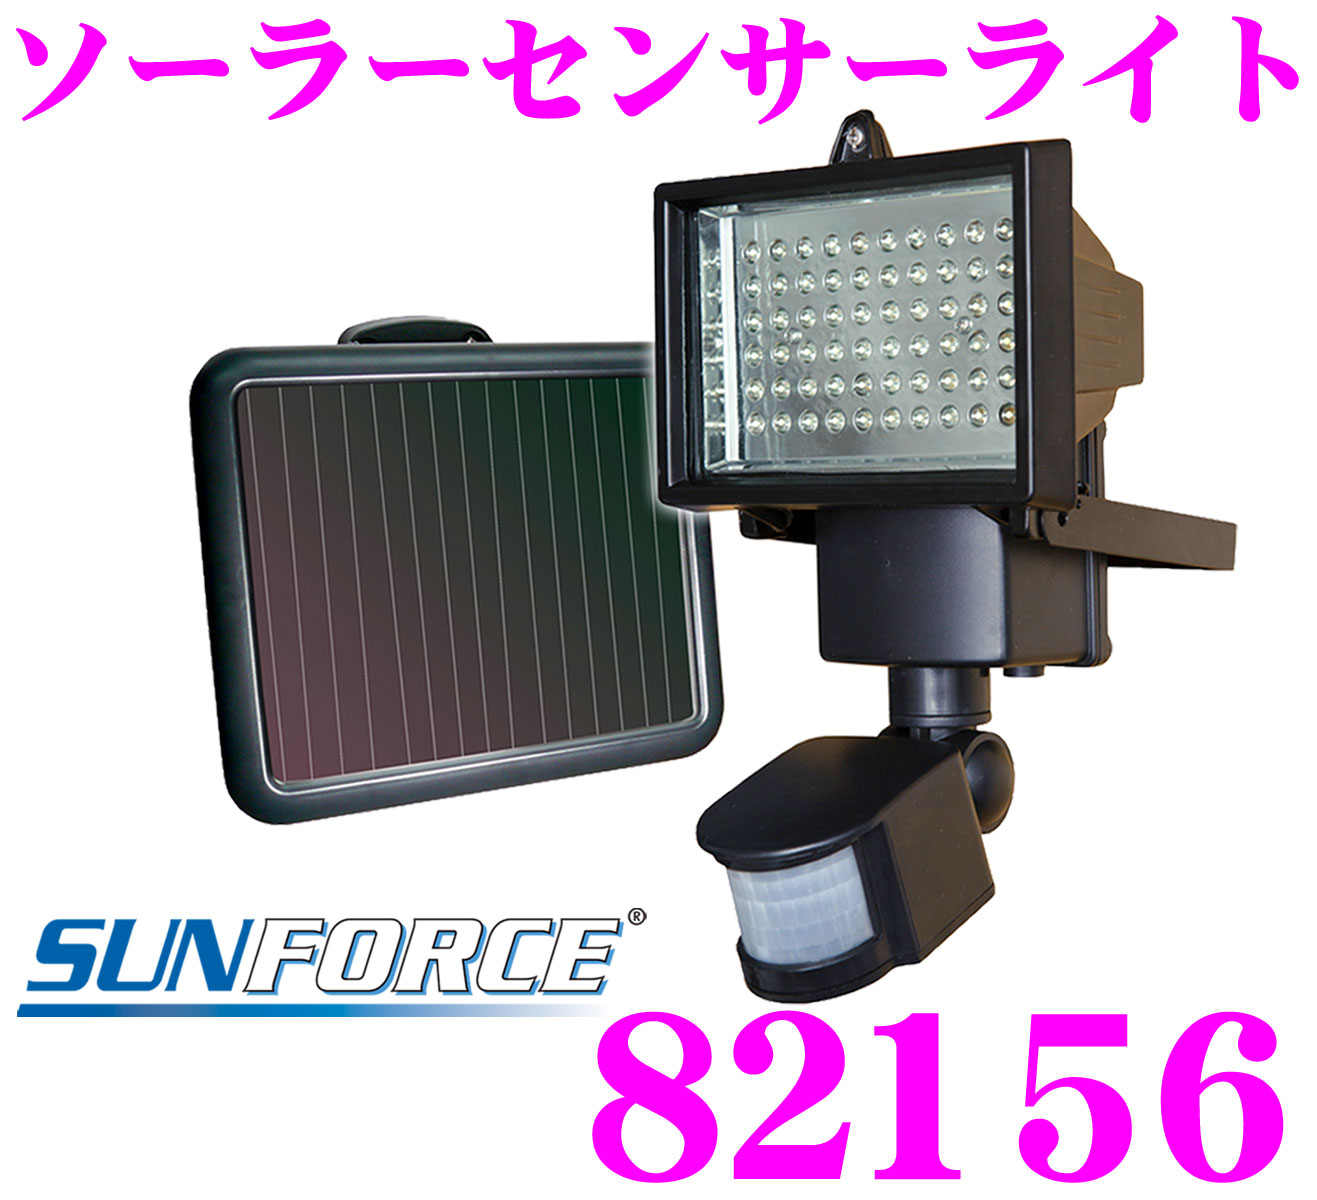 SUNFORCE ソーラーセンサーライト82156 【60粒超白光LED 光量合計850ル…...:creer:10024155